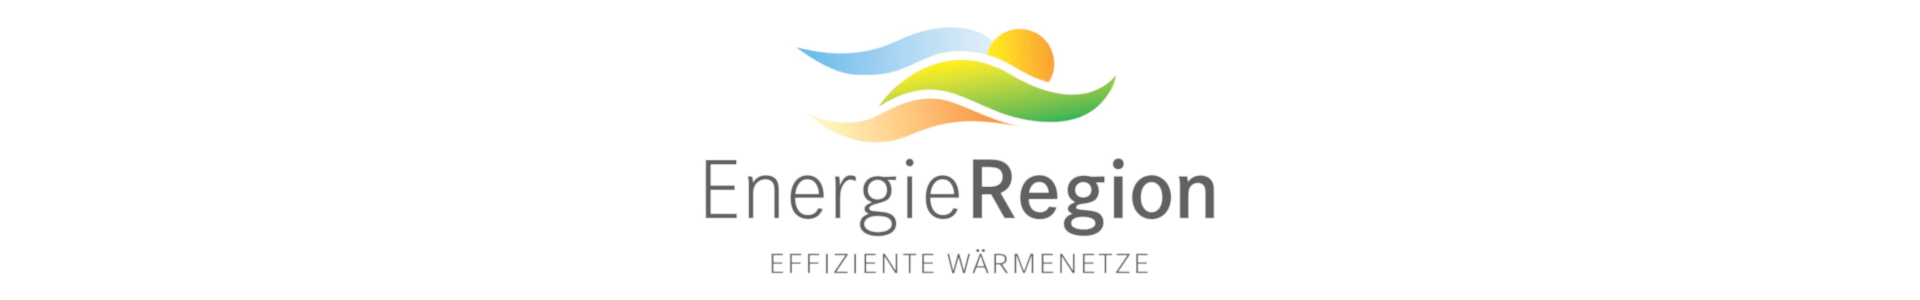 Fachkongress „EnergieRegion – effiziente Wärmenetze“